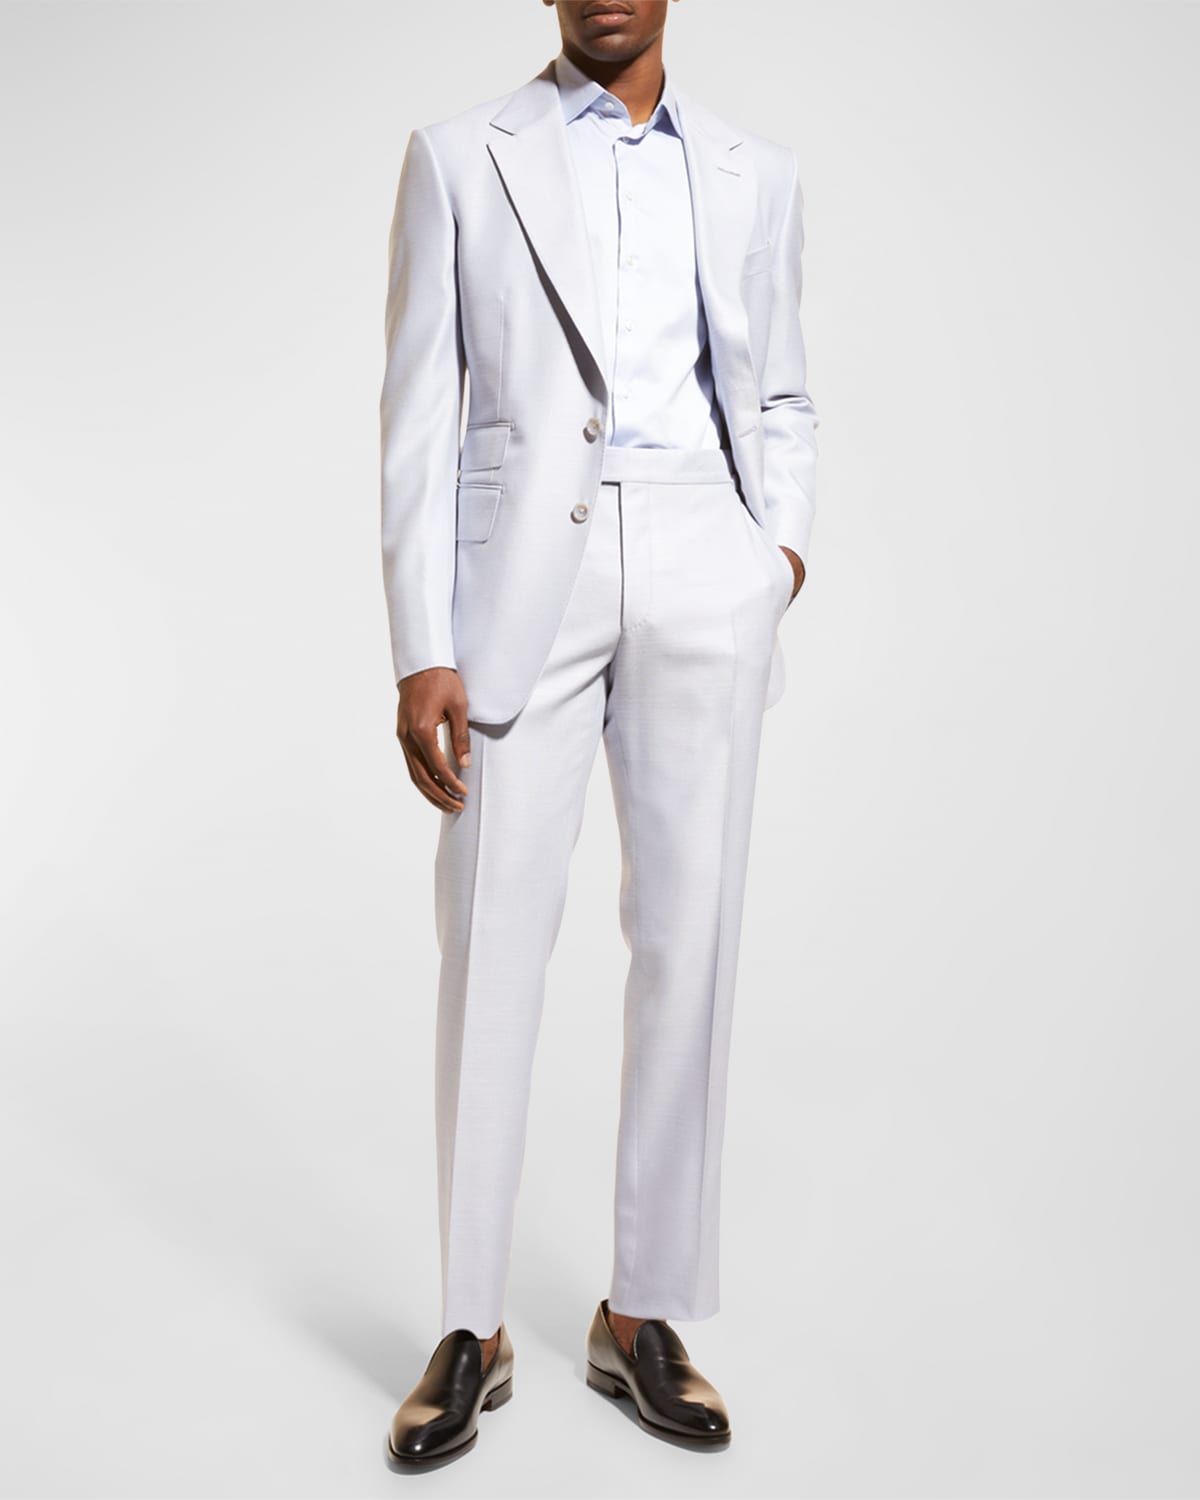 Tom Ford Suit | Neiman Marcus